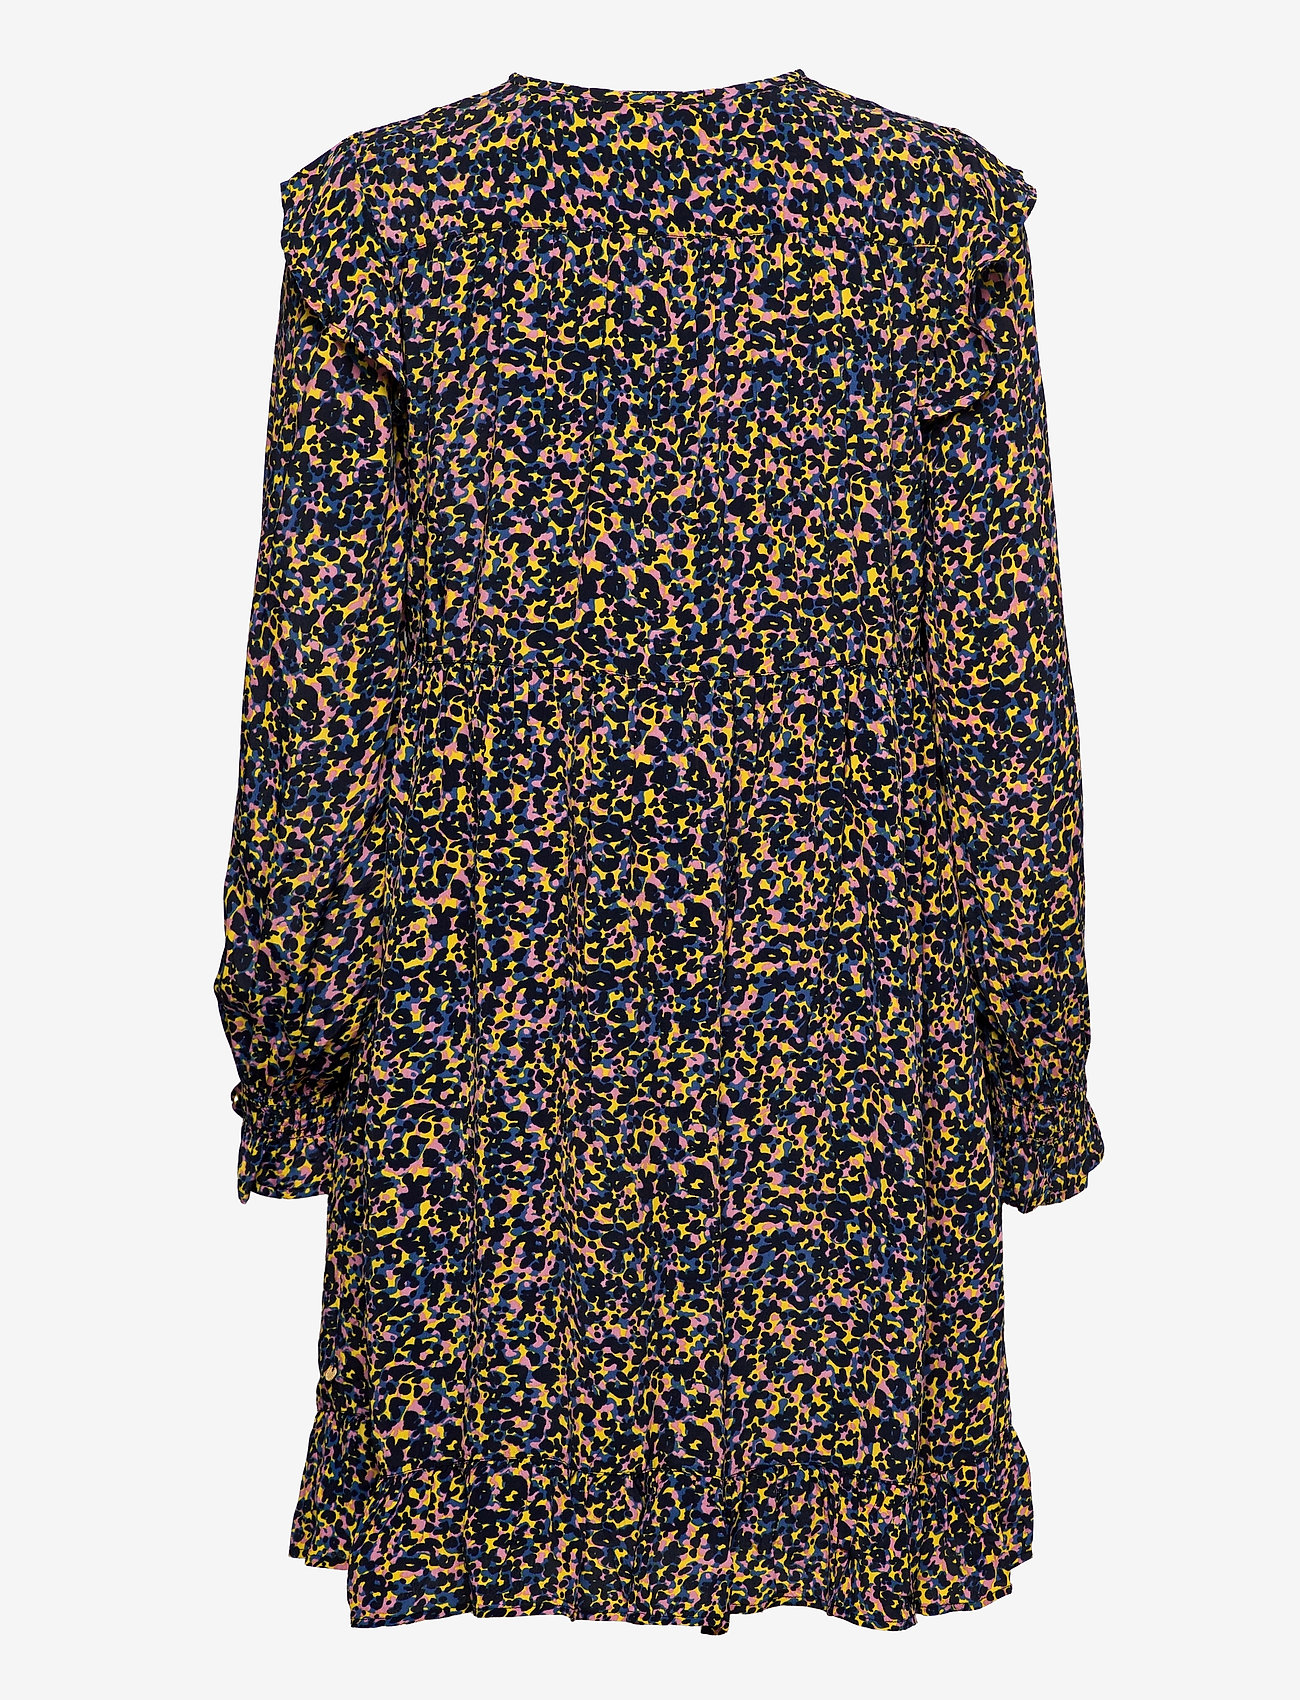 Scotch & Soda - Printed drapey dress with shoulder ruffles - summer dresses - combo c - 1